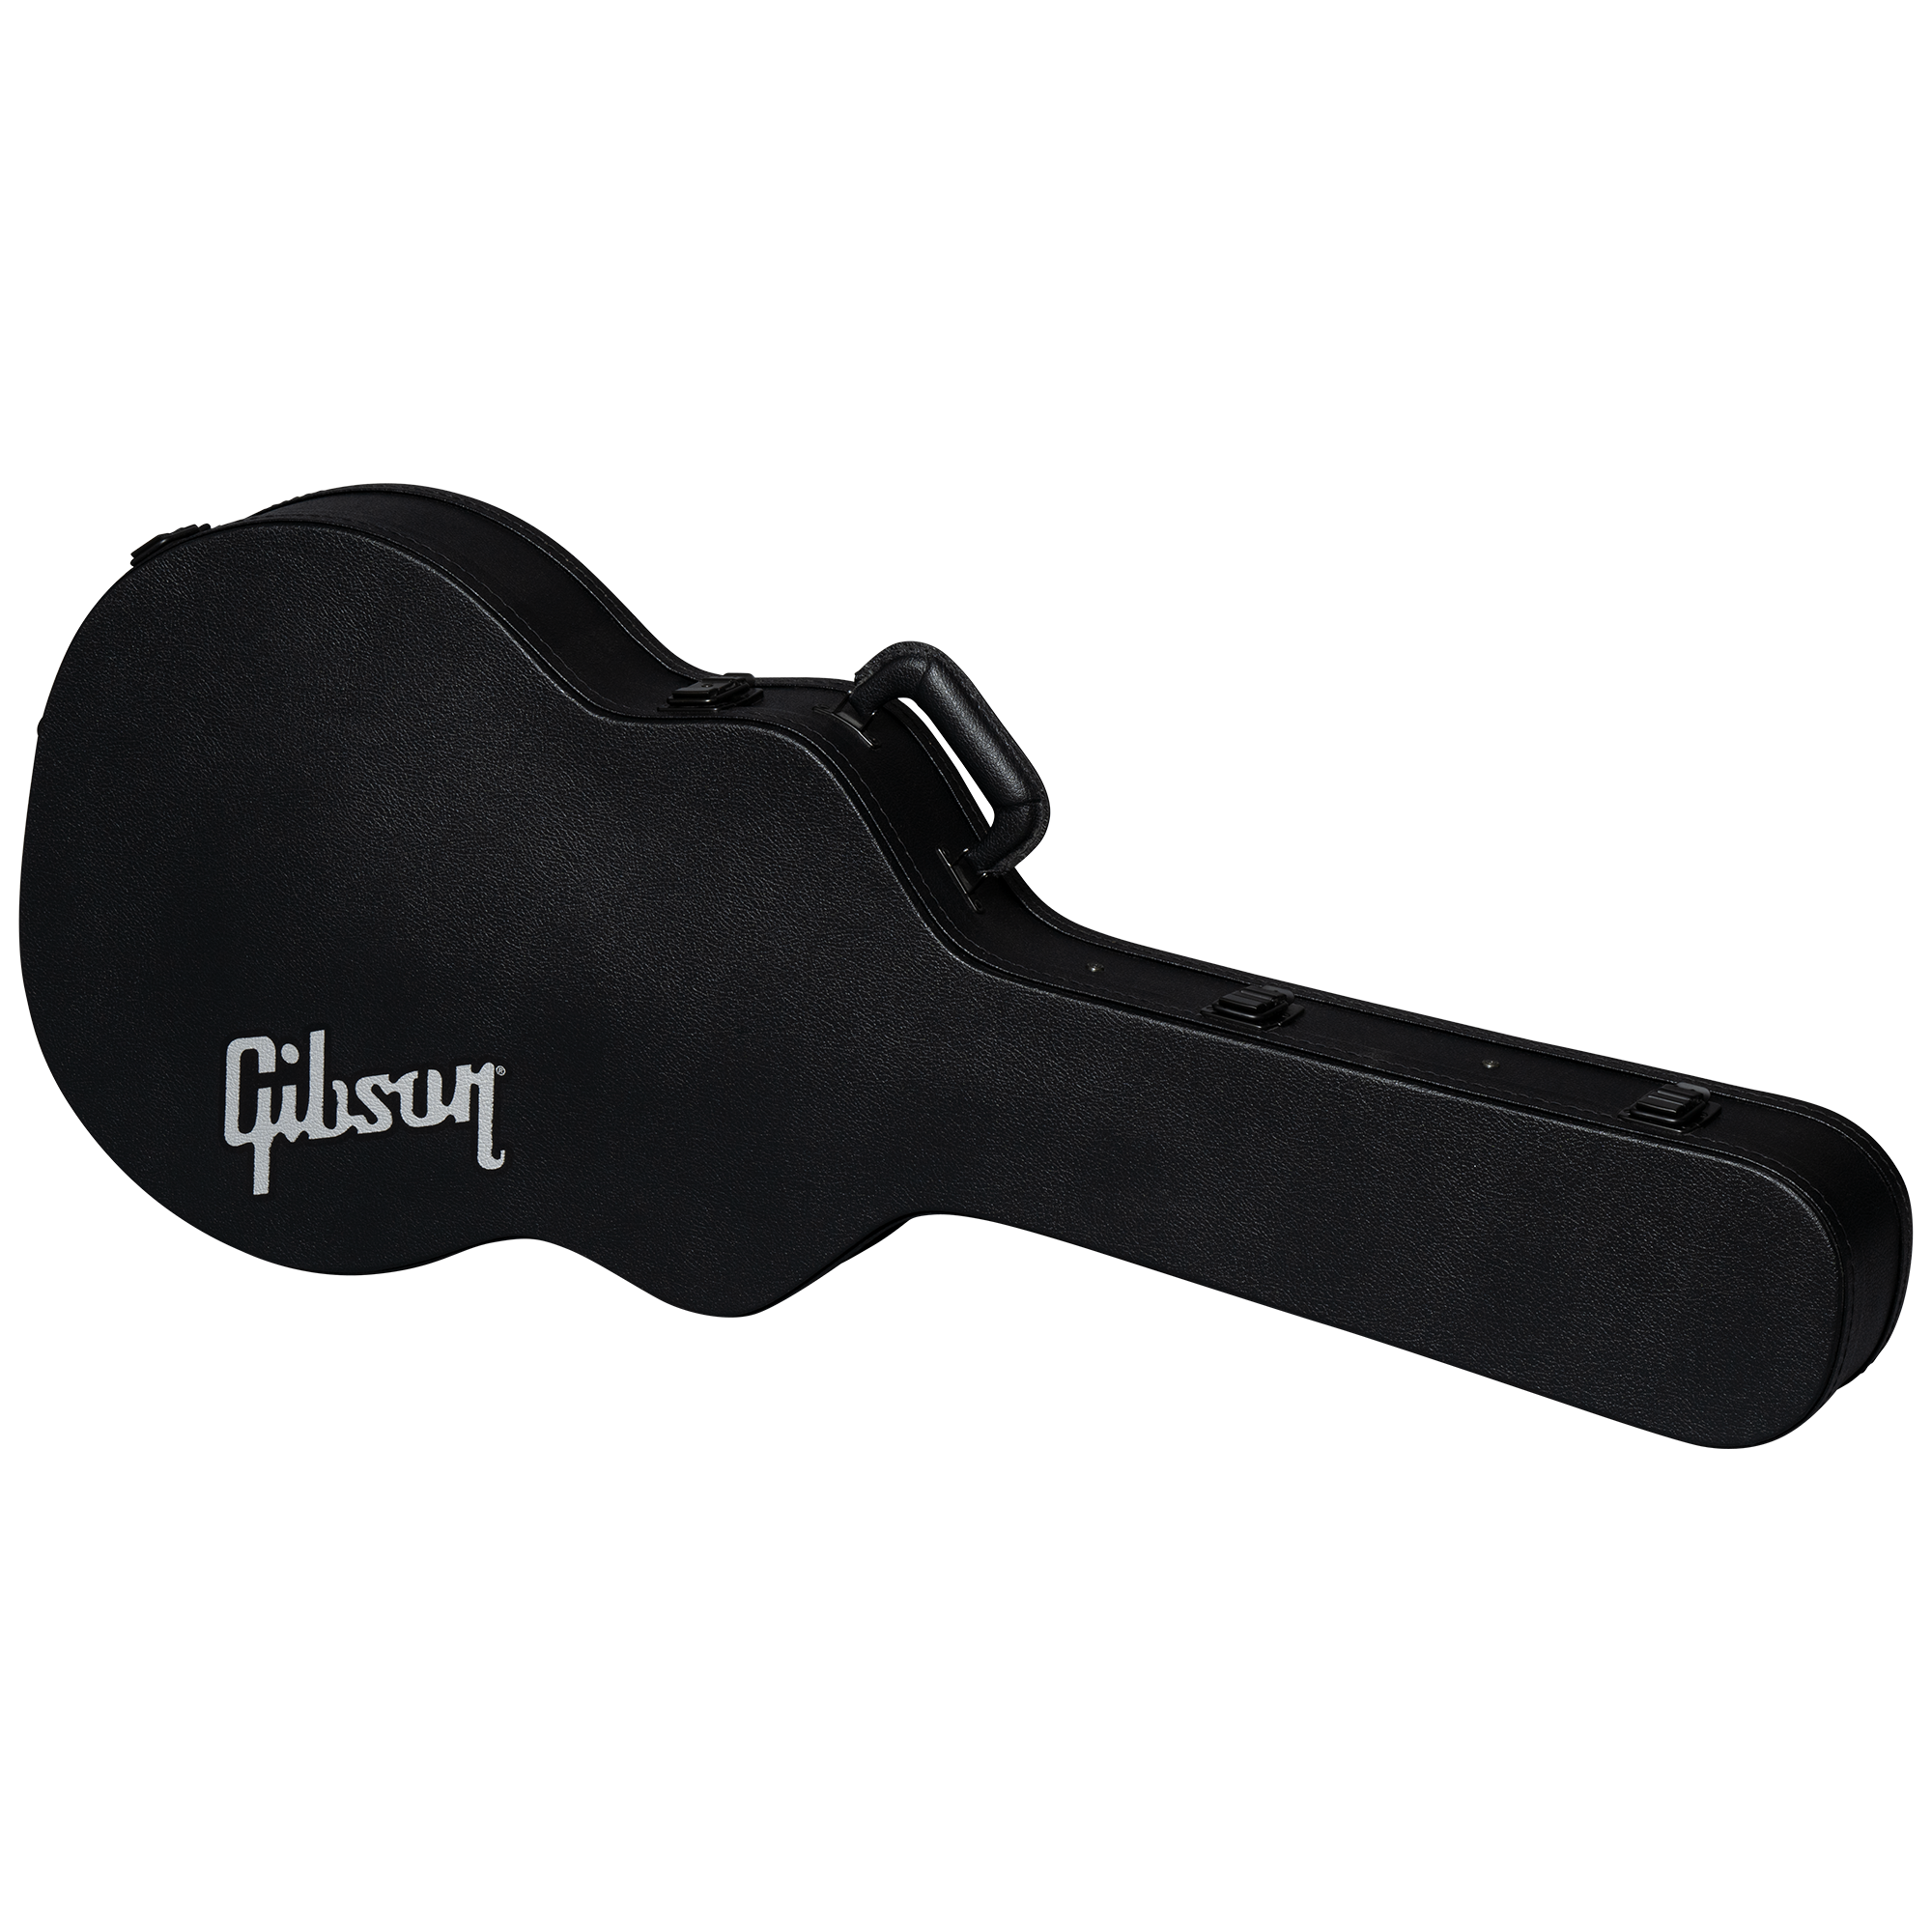 ES-335 Modern Hardshell Case | Gibson